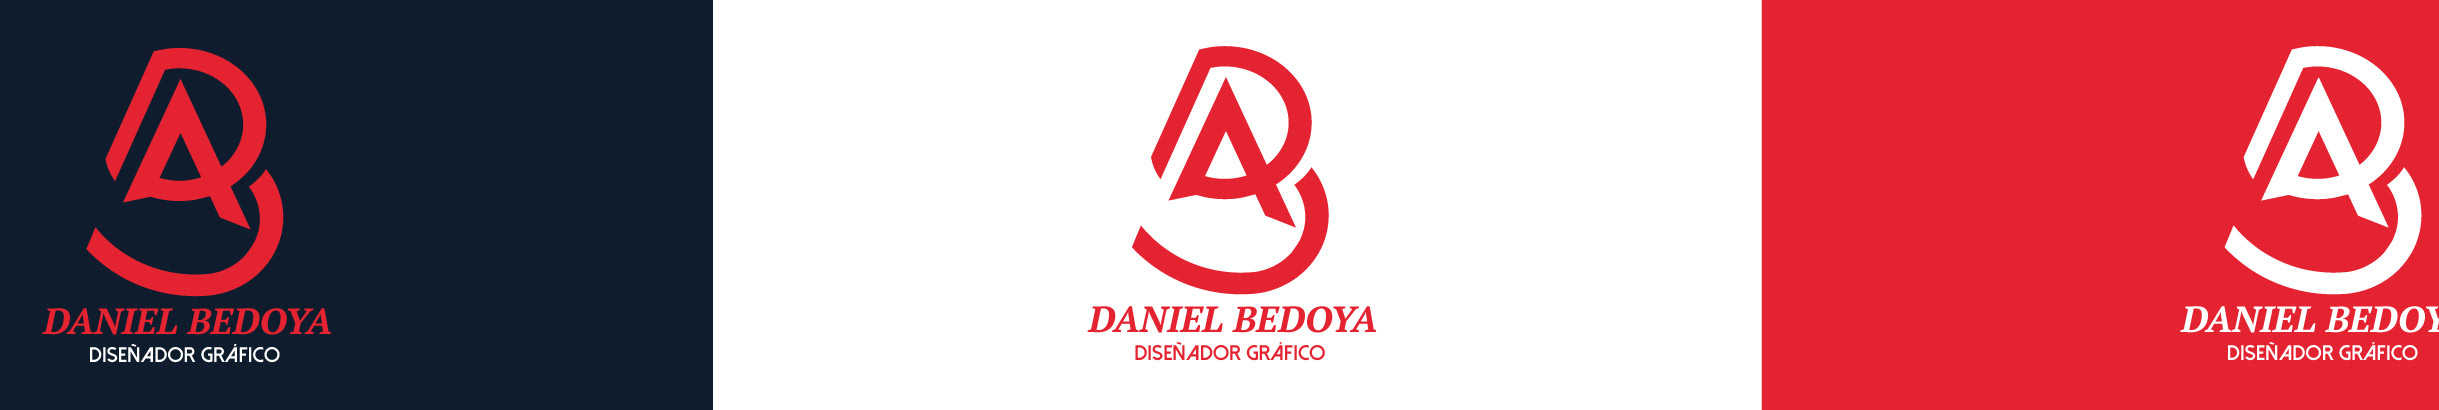 Daniel Bedoya's profile banner